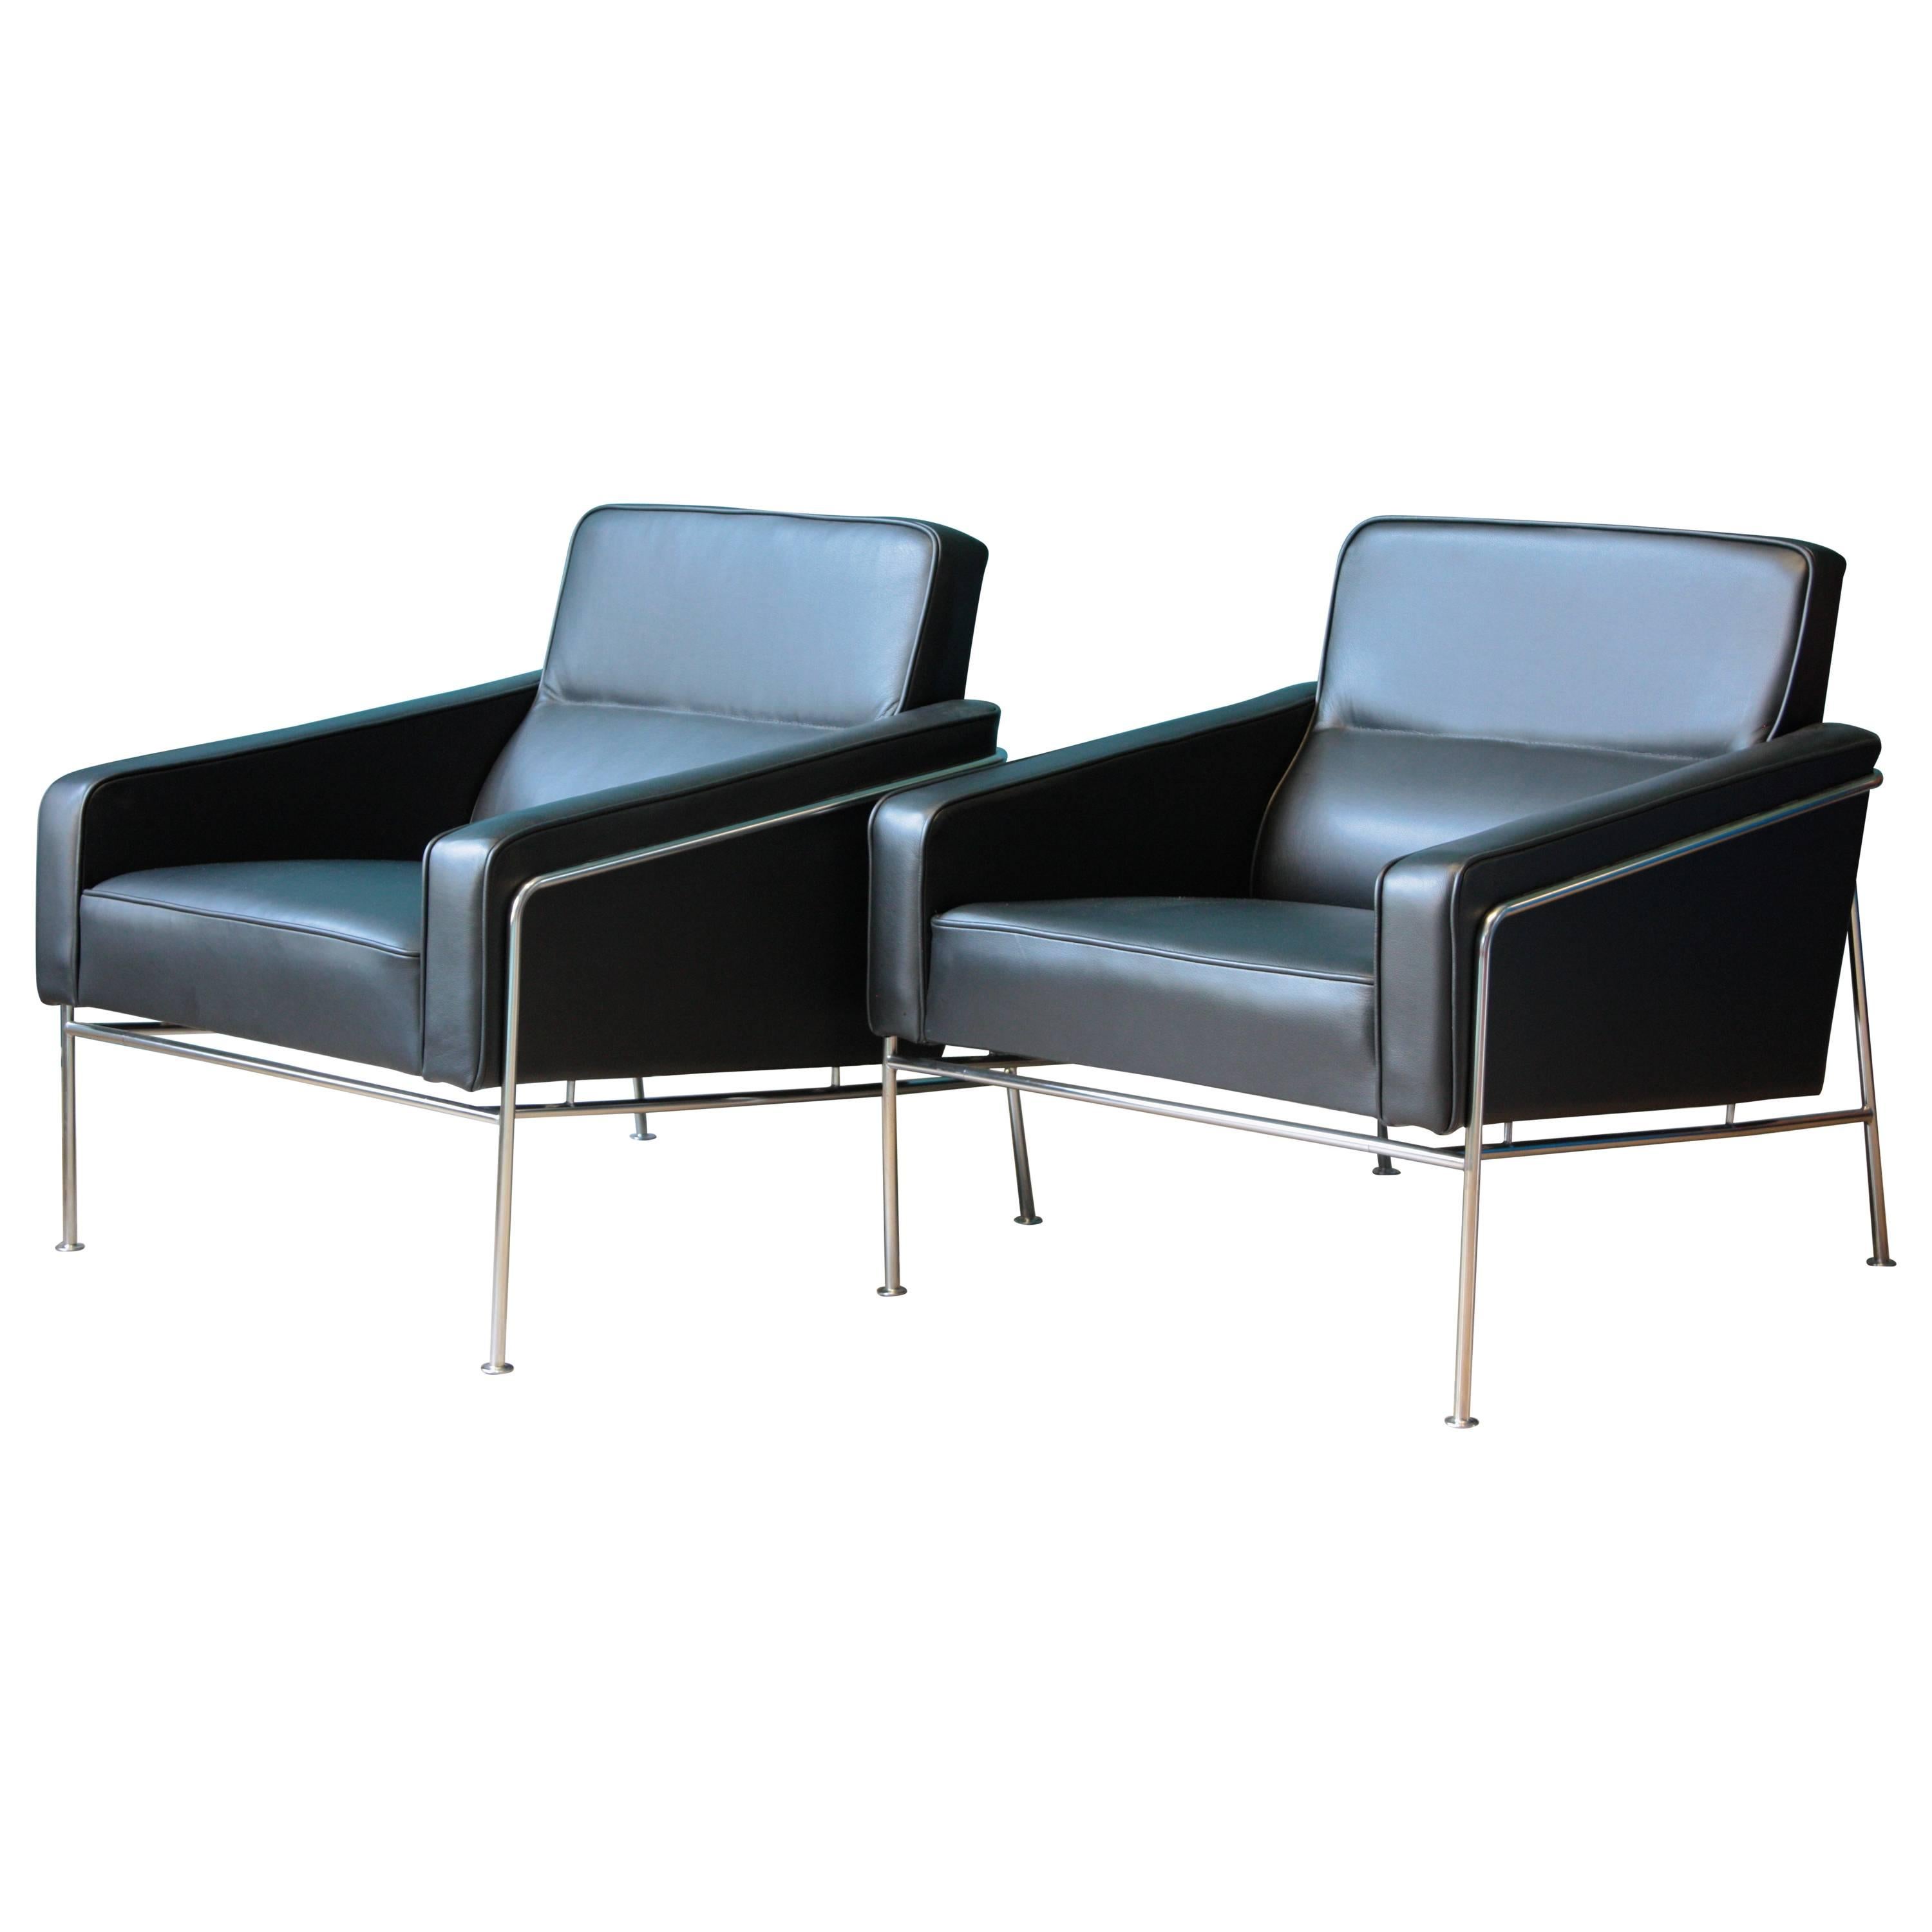 Model 3300 Lounge Chairs by Arne Jacobsen for Fritz Hansen